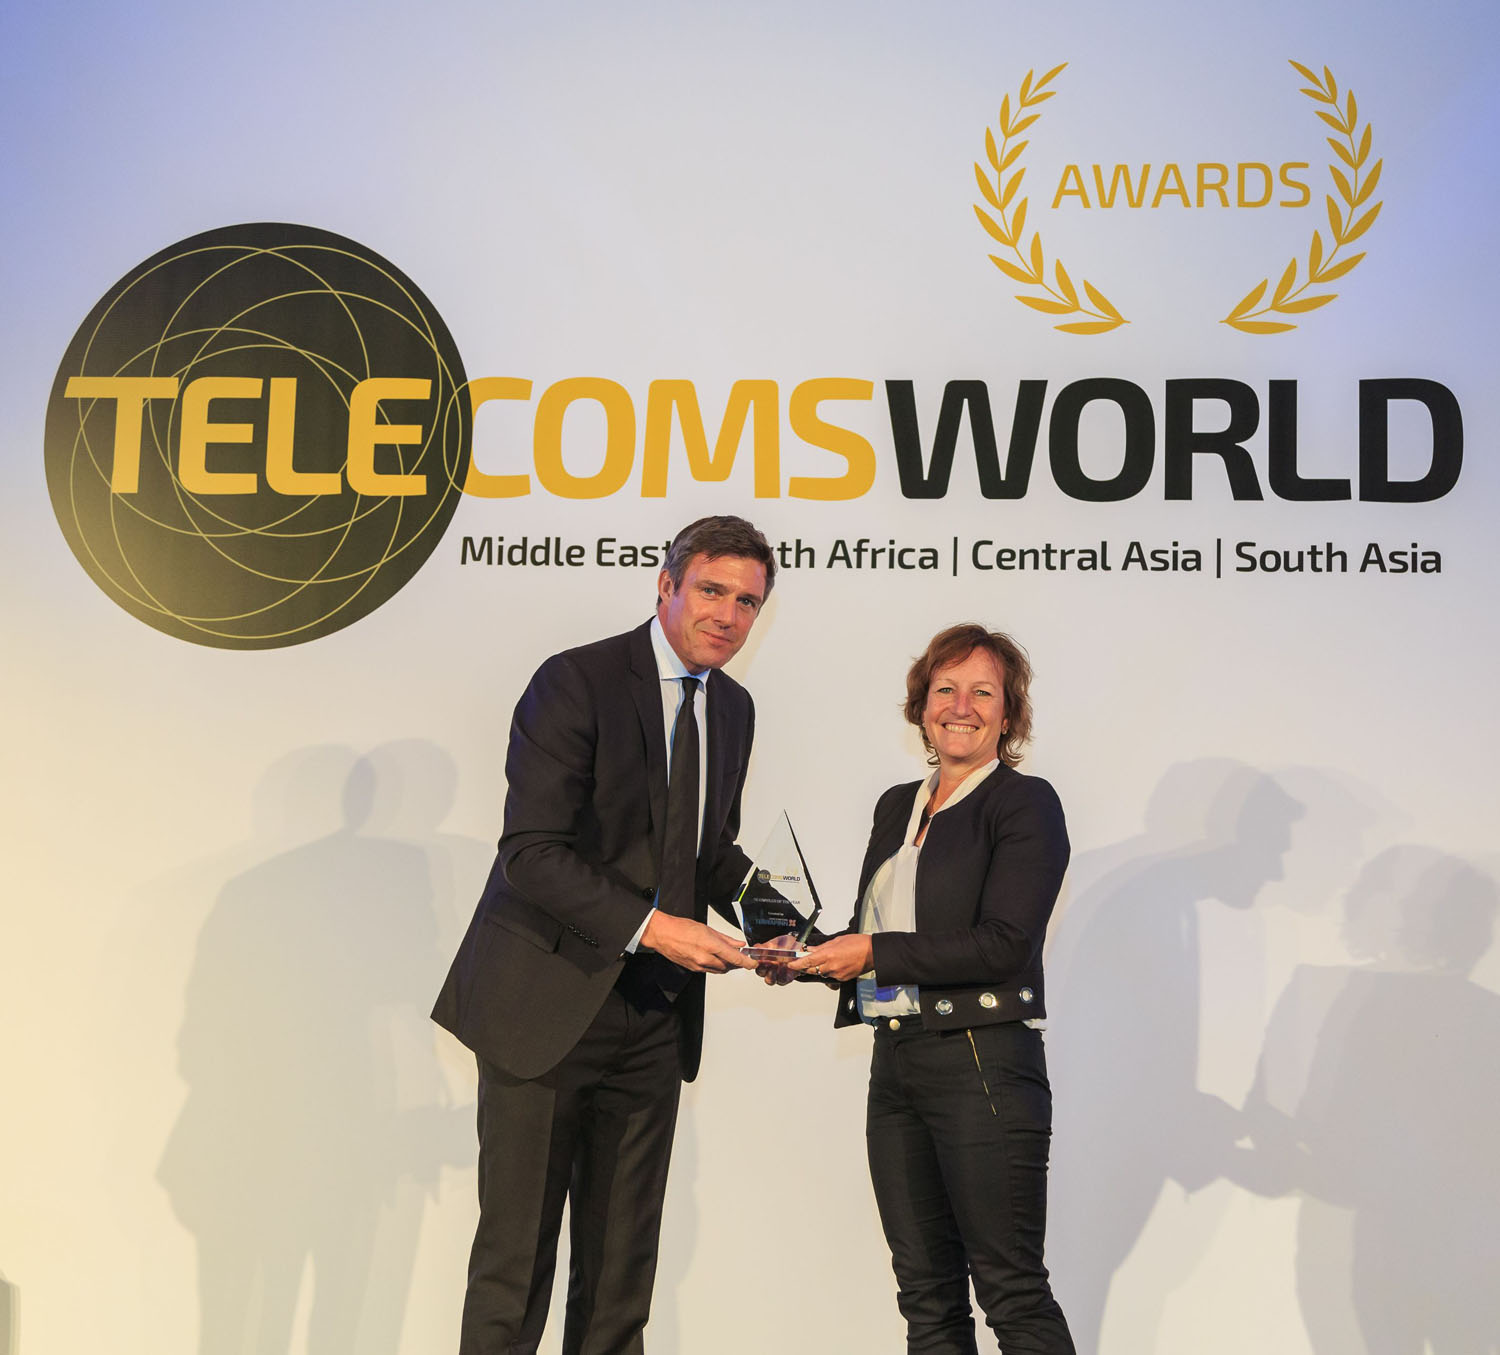 TelecomsWorldAwards2018-1.jpg